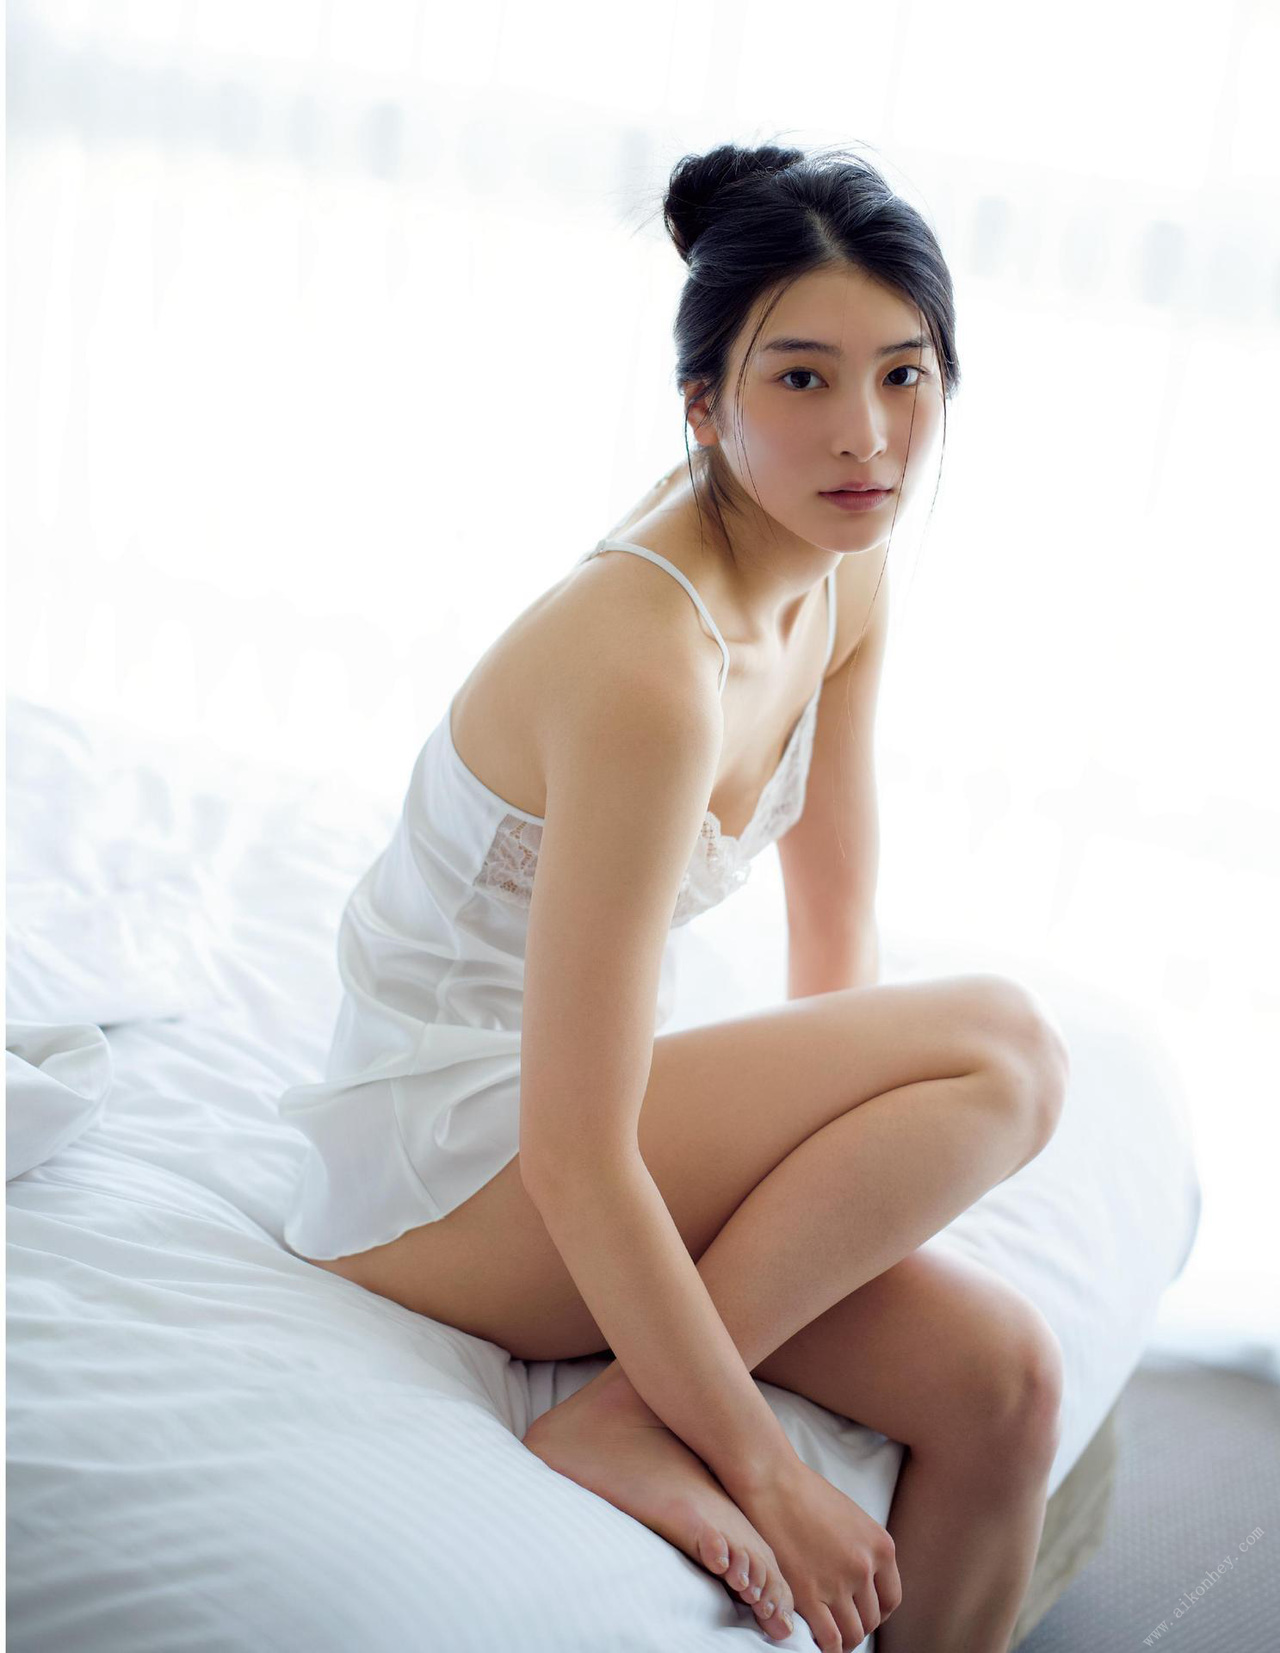 Suzu Honjo Natural Beauty Set Share Erotic Asian Girl Picture Livestream